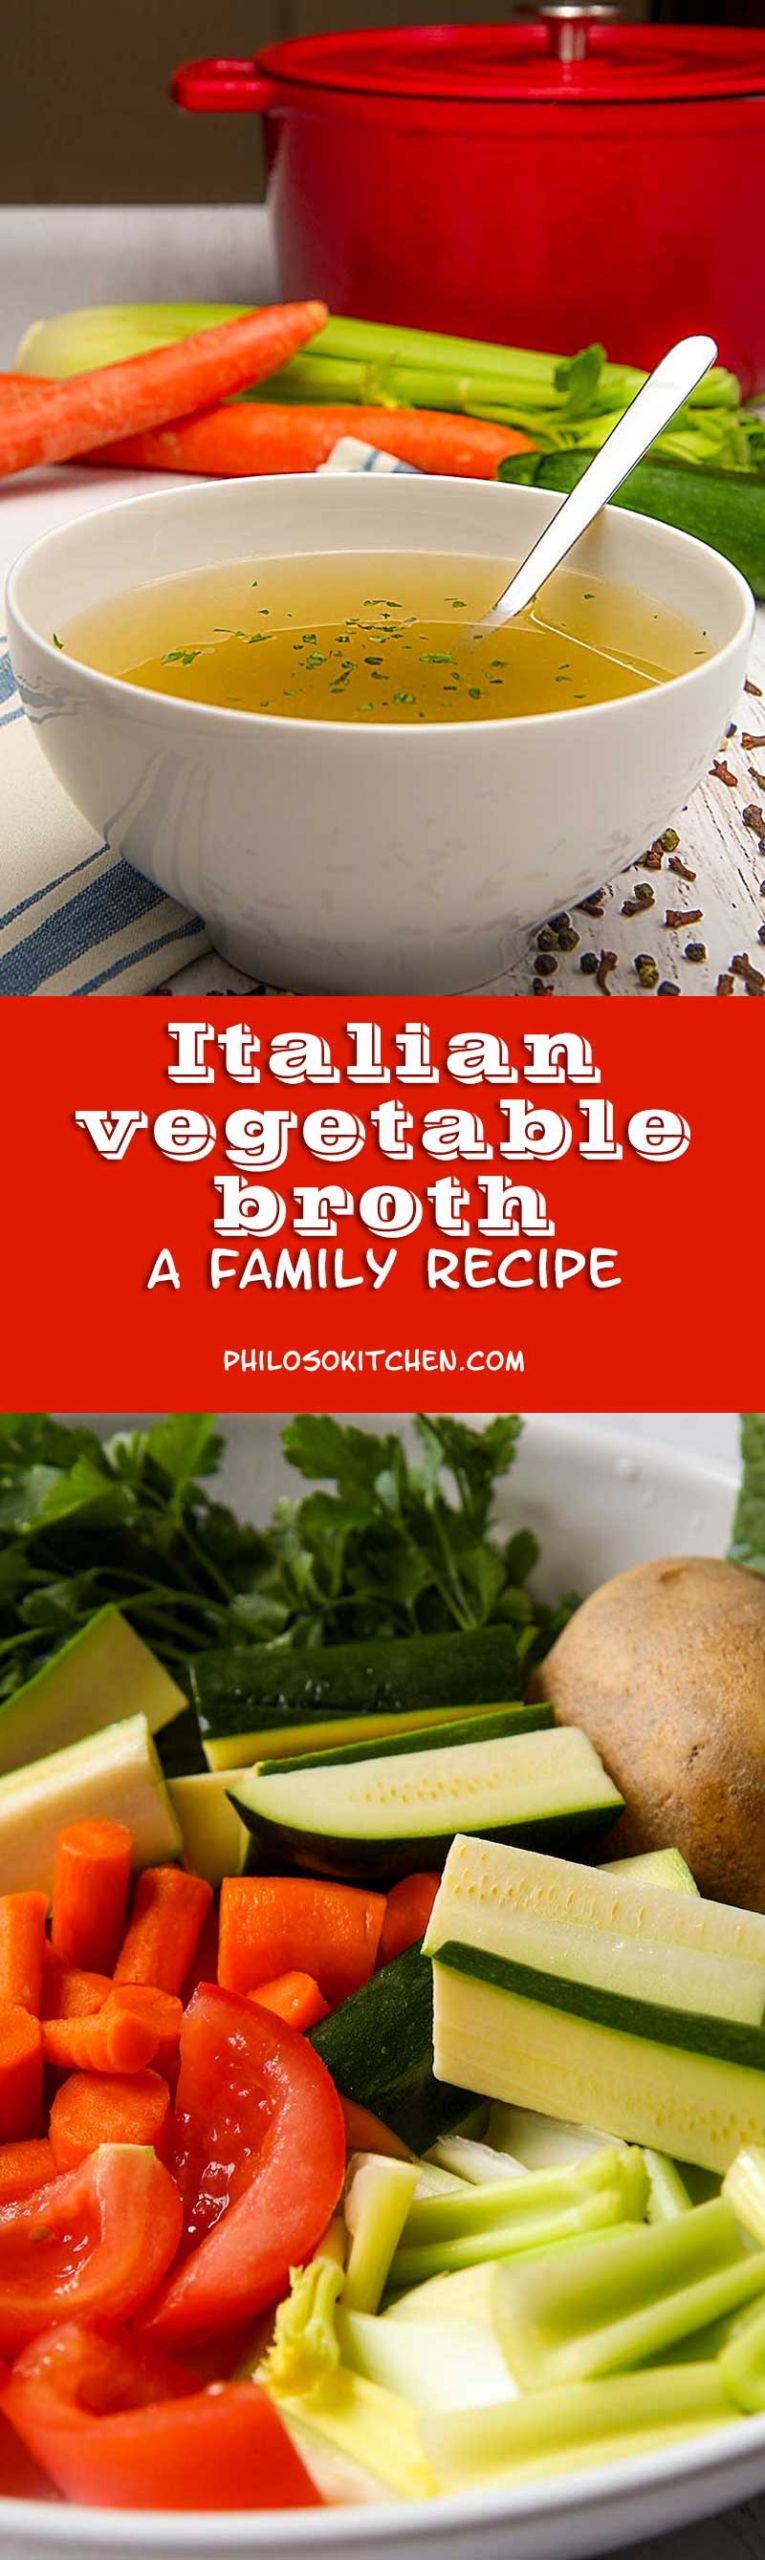 Italian Vegetable Recipes
 ITALIAN VEGETABLE BROTH RECIPE a family recipe